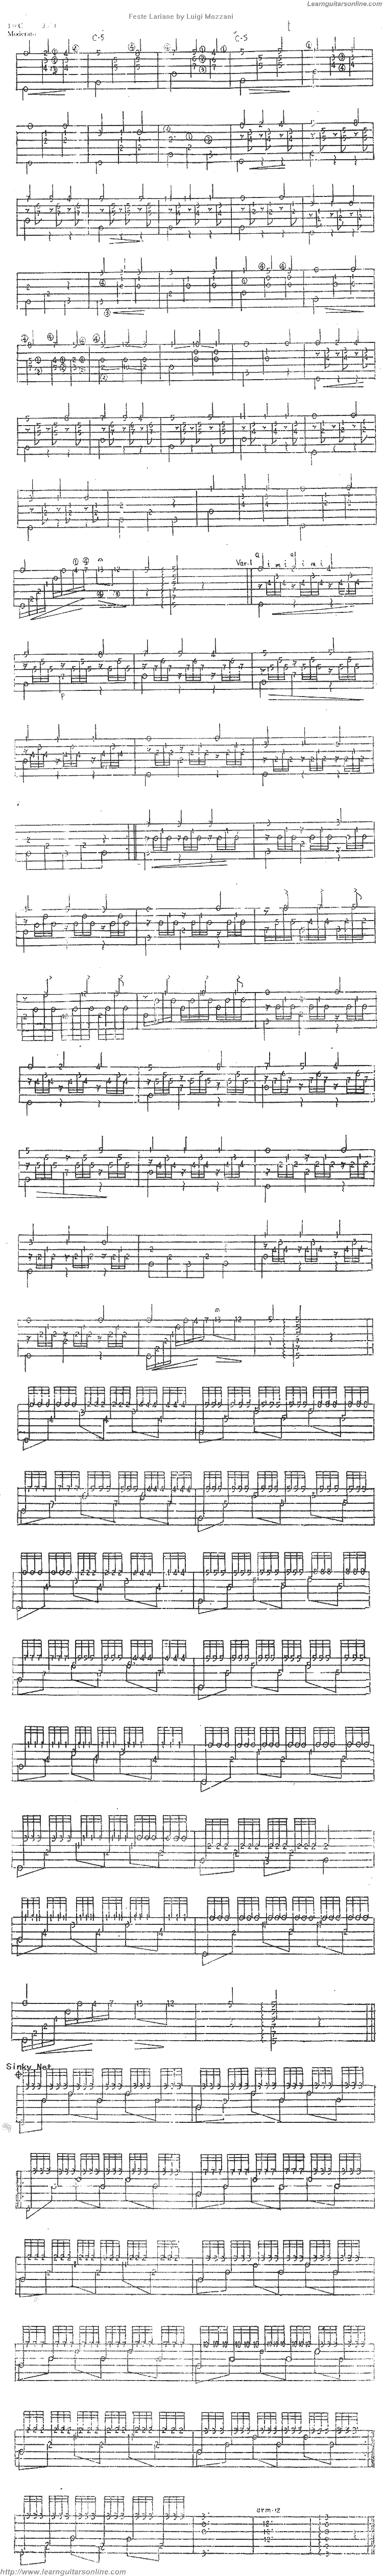 Feste Lariane by Luigi Mozzani Guitar Tabs Chords Solo Notes Sheet Music Free